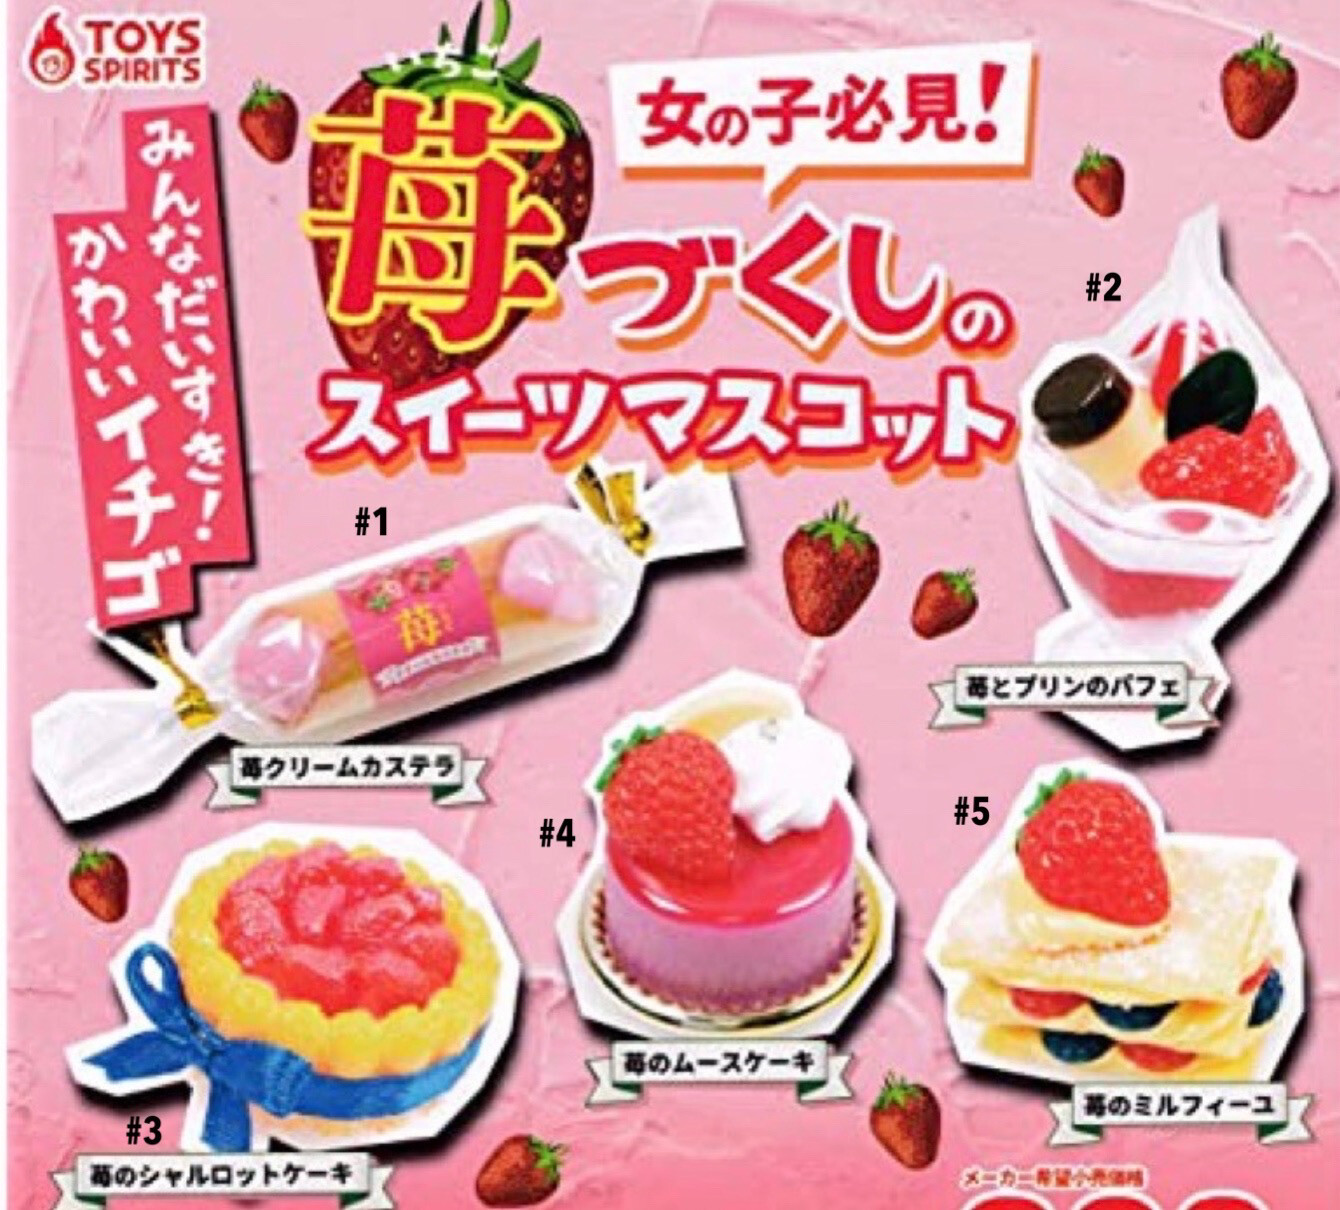 Toys Spirits Strawberry Dessert Food Mascot Keychain Gashapon